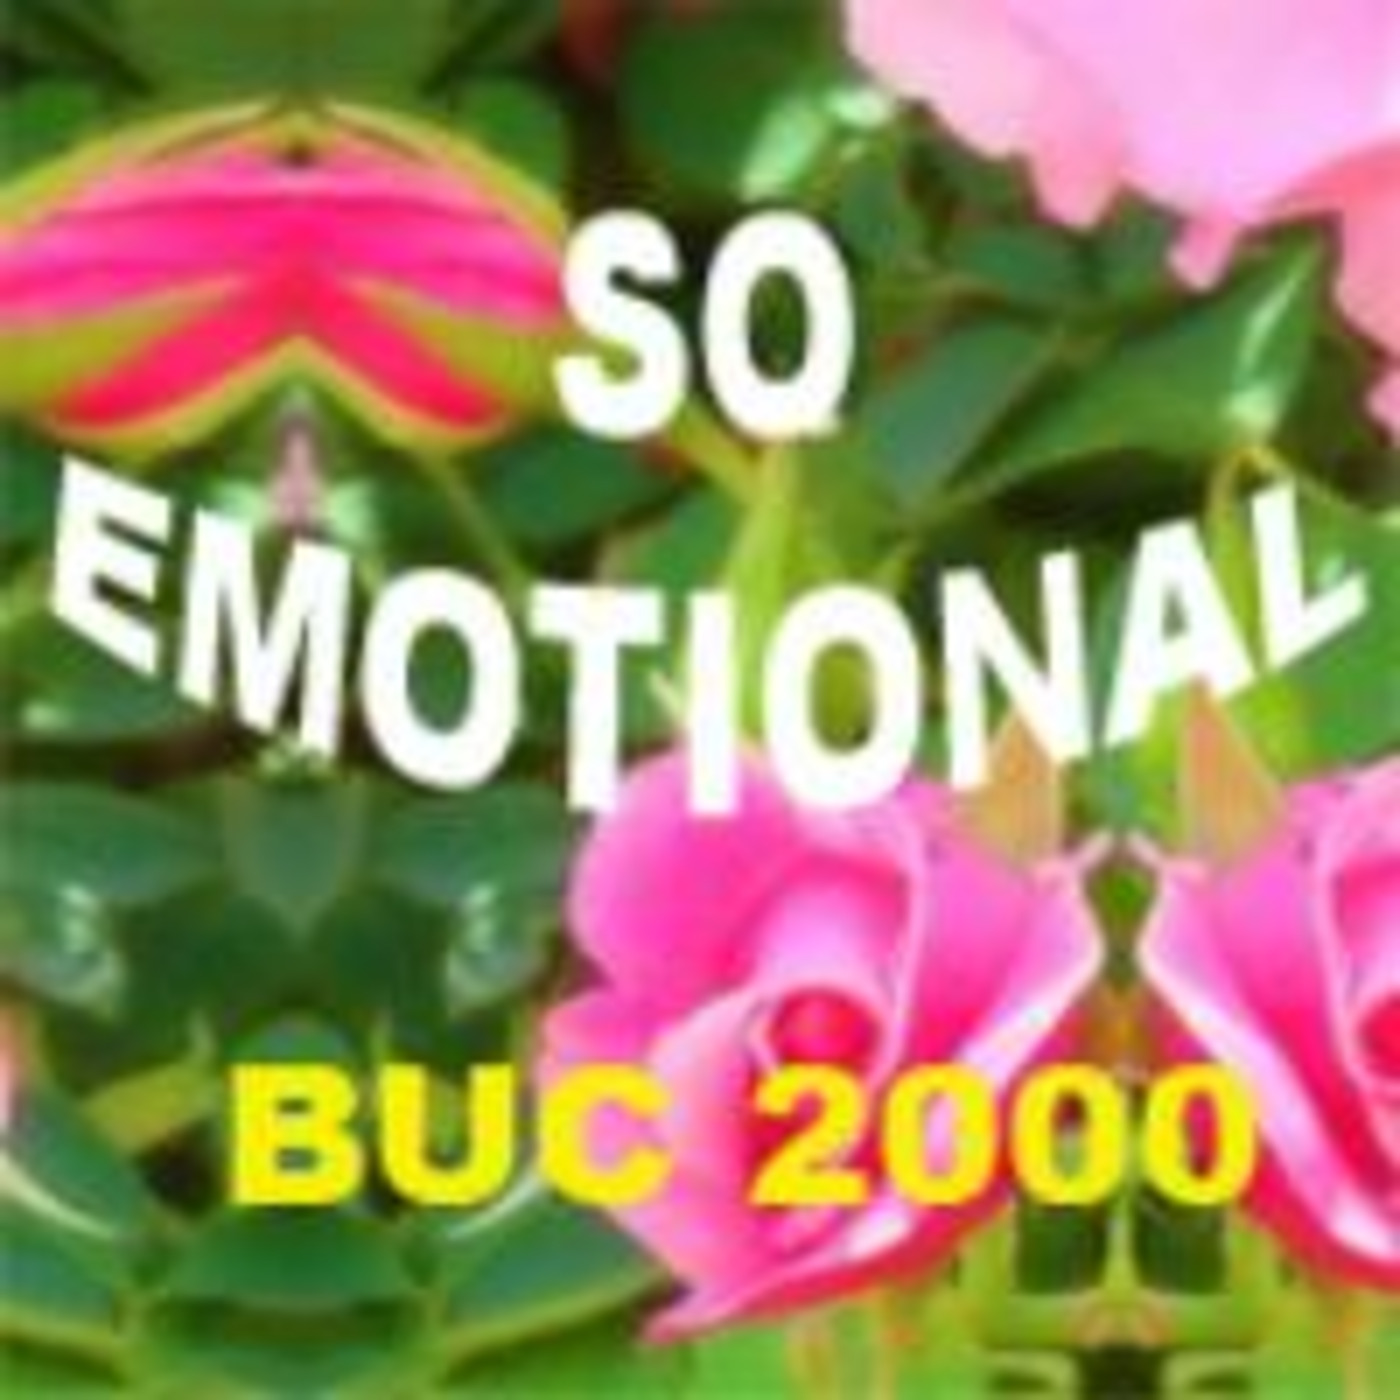 DJ Buc_So Emotional (2000) - Part 5